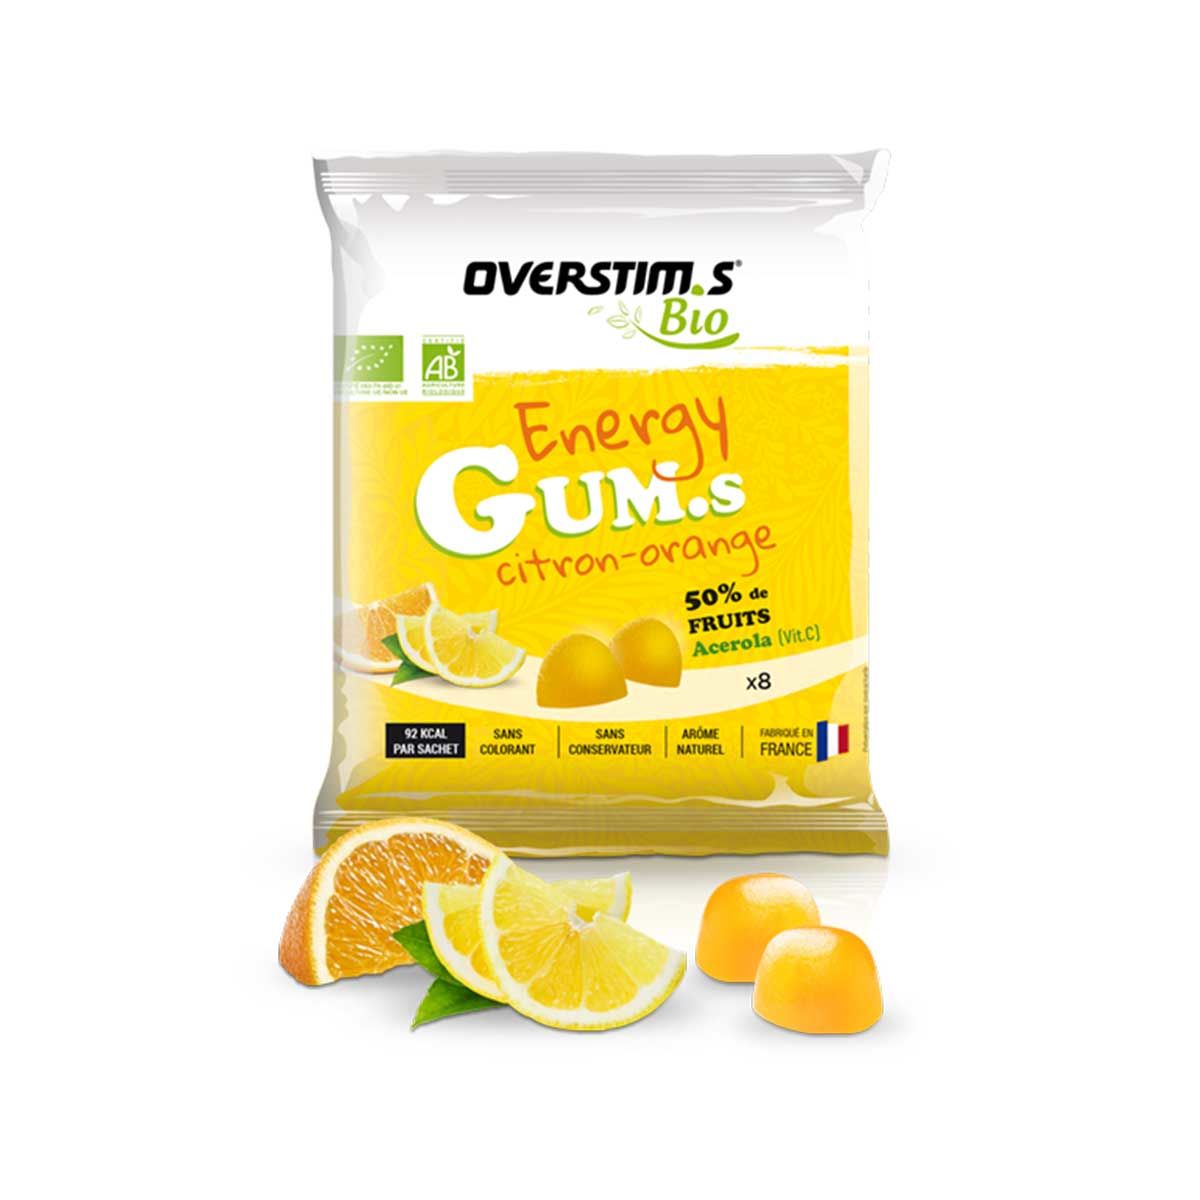 Overstim.s organic energy gums - Lemon, orange